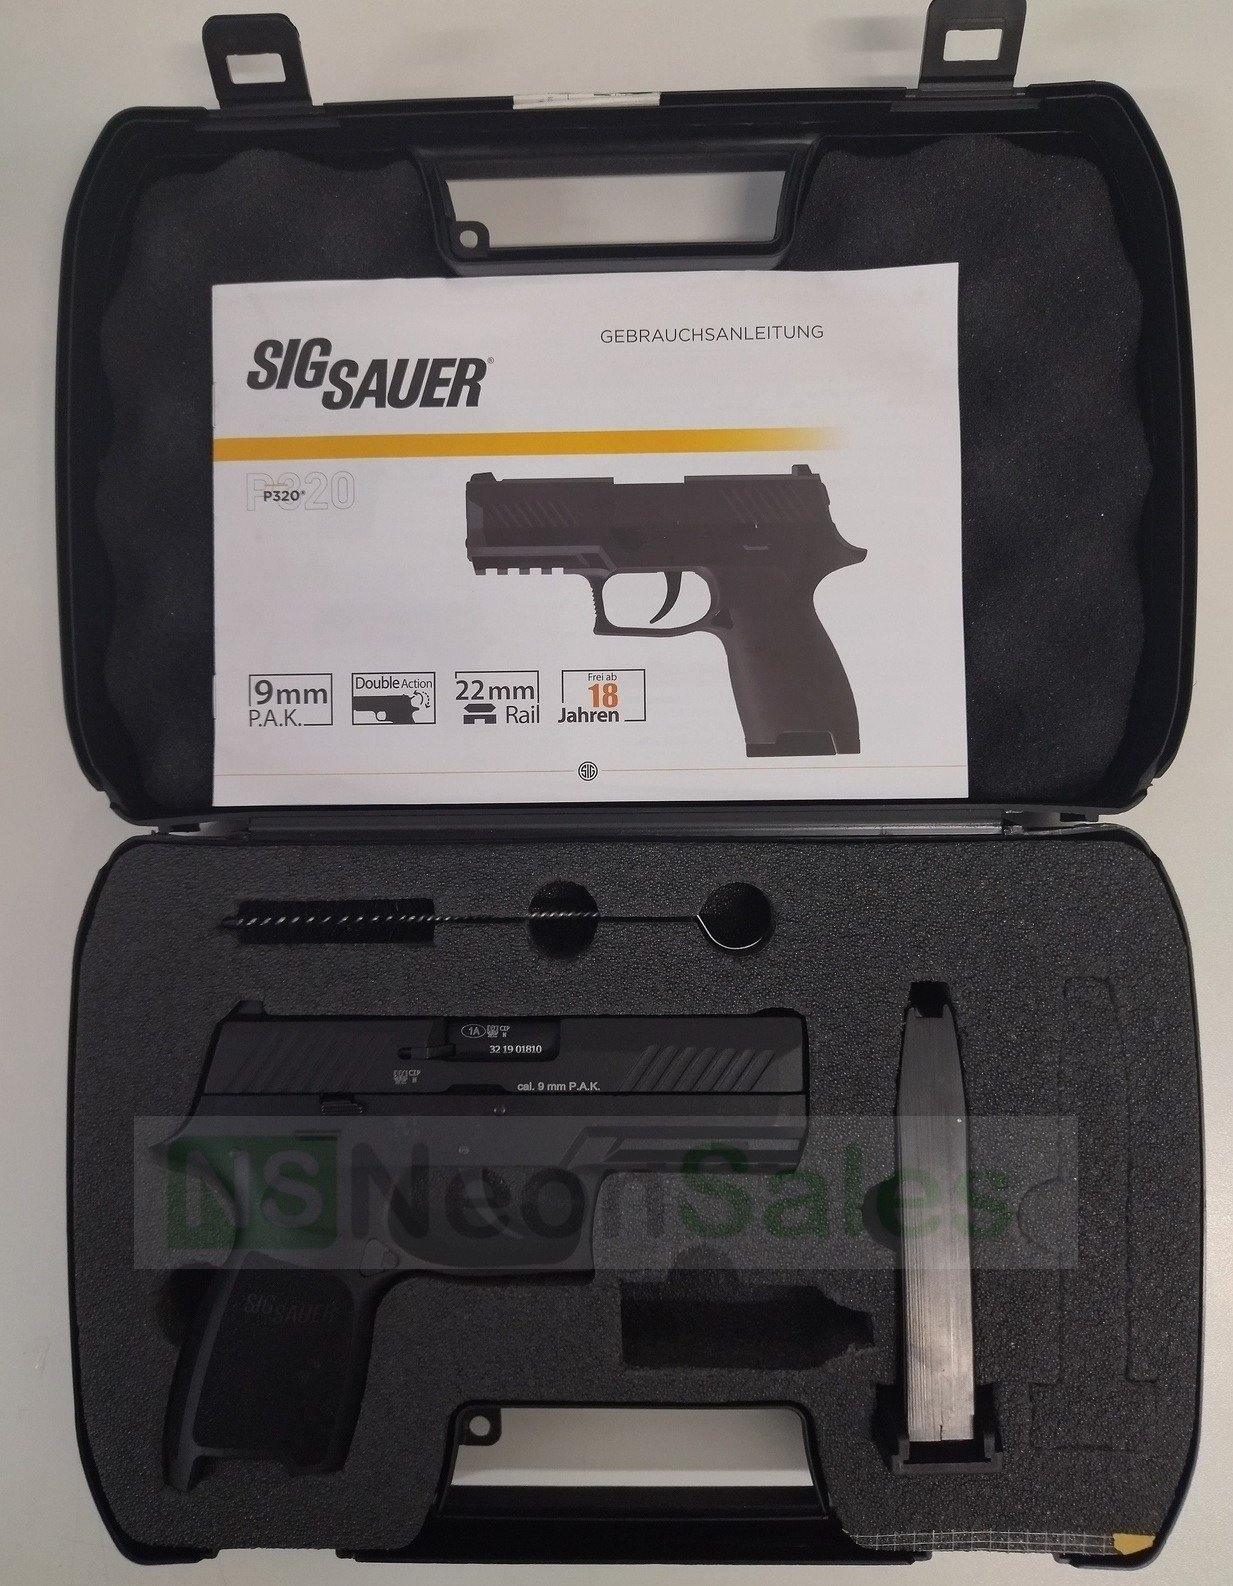 SIG SAUER P320 BLANK GUN - LICENSED REPLICA - NeonSales South Africa